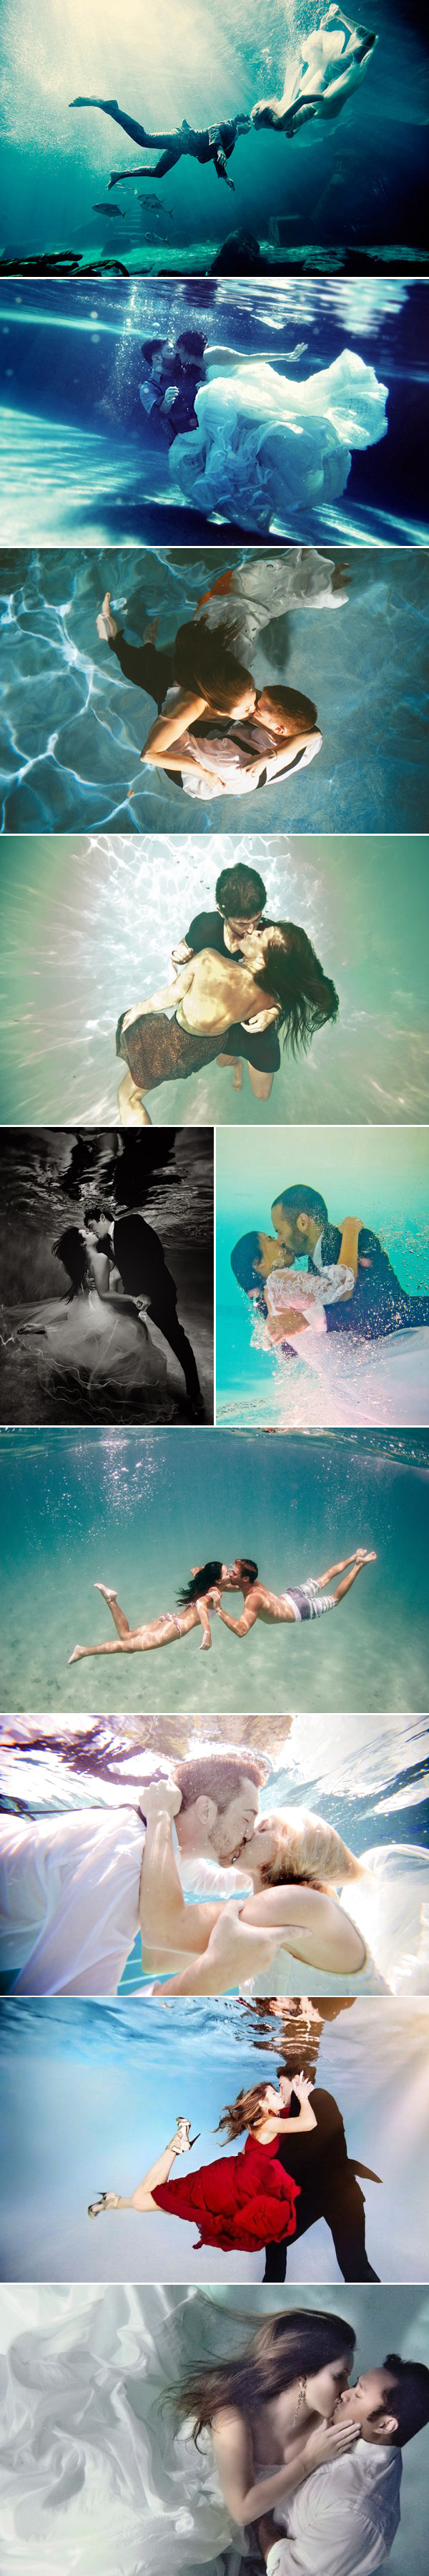 Romantic Underwater Engagement Photo Ideas